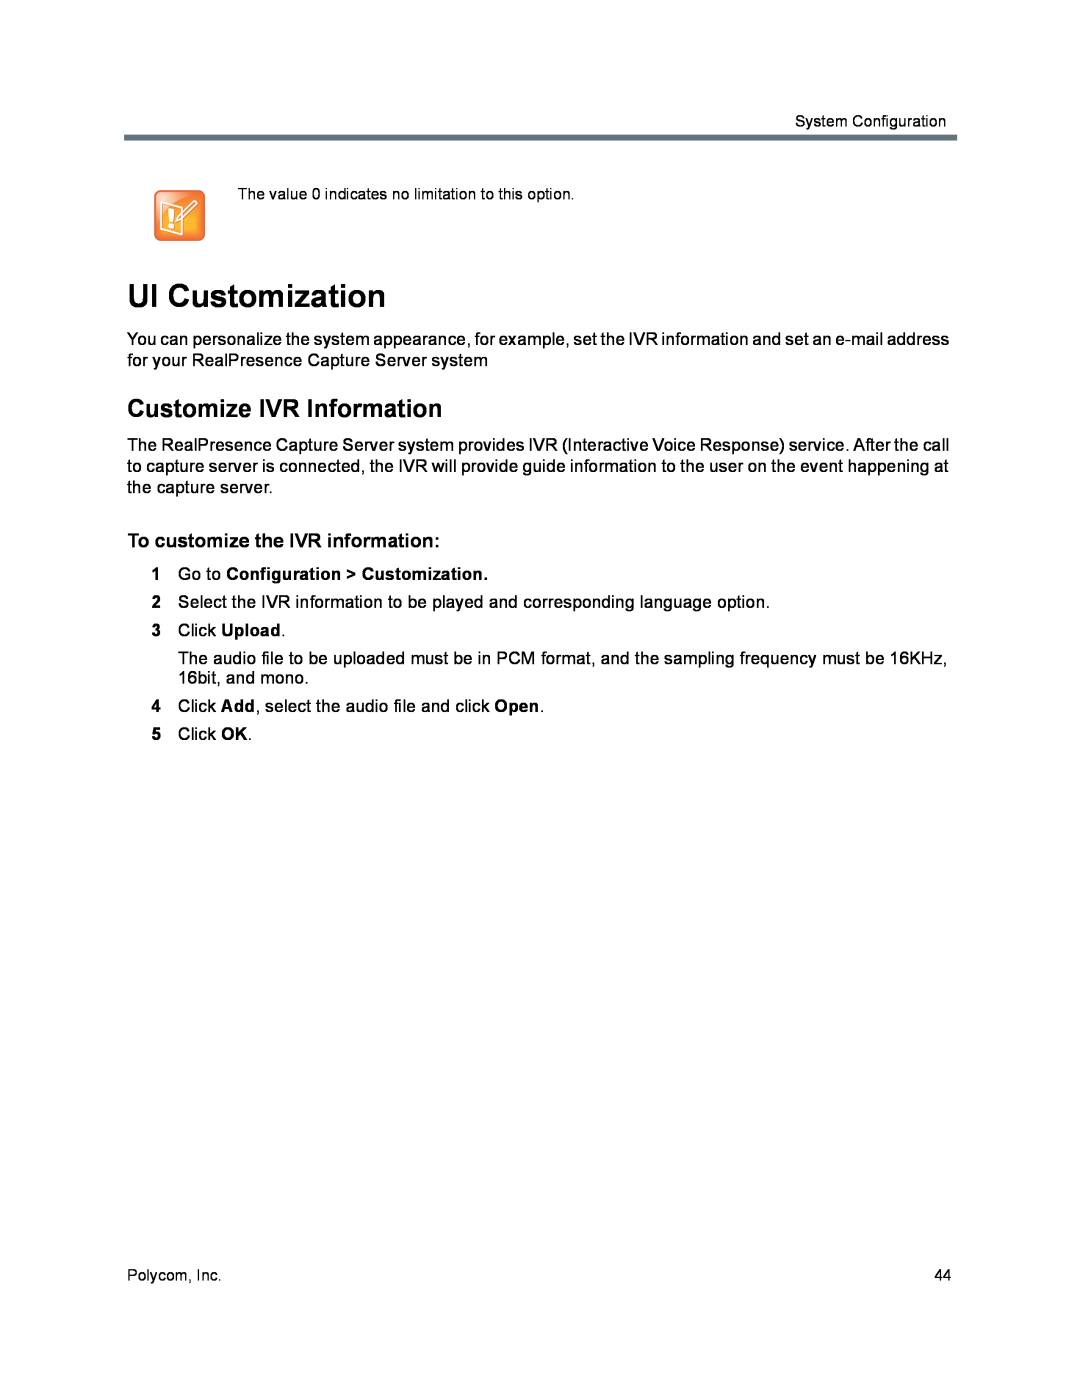 Polycom 40/0 manual UI Customization, Customize IVR Information, To customize the IVR information 